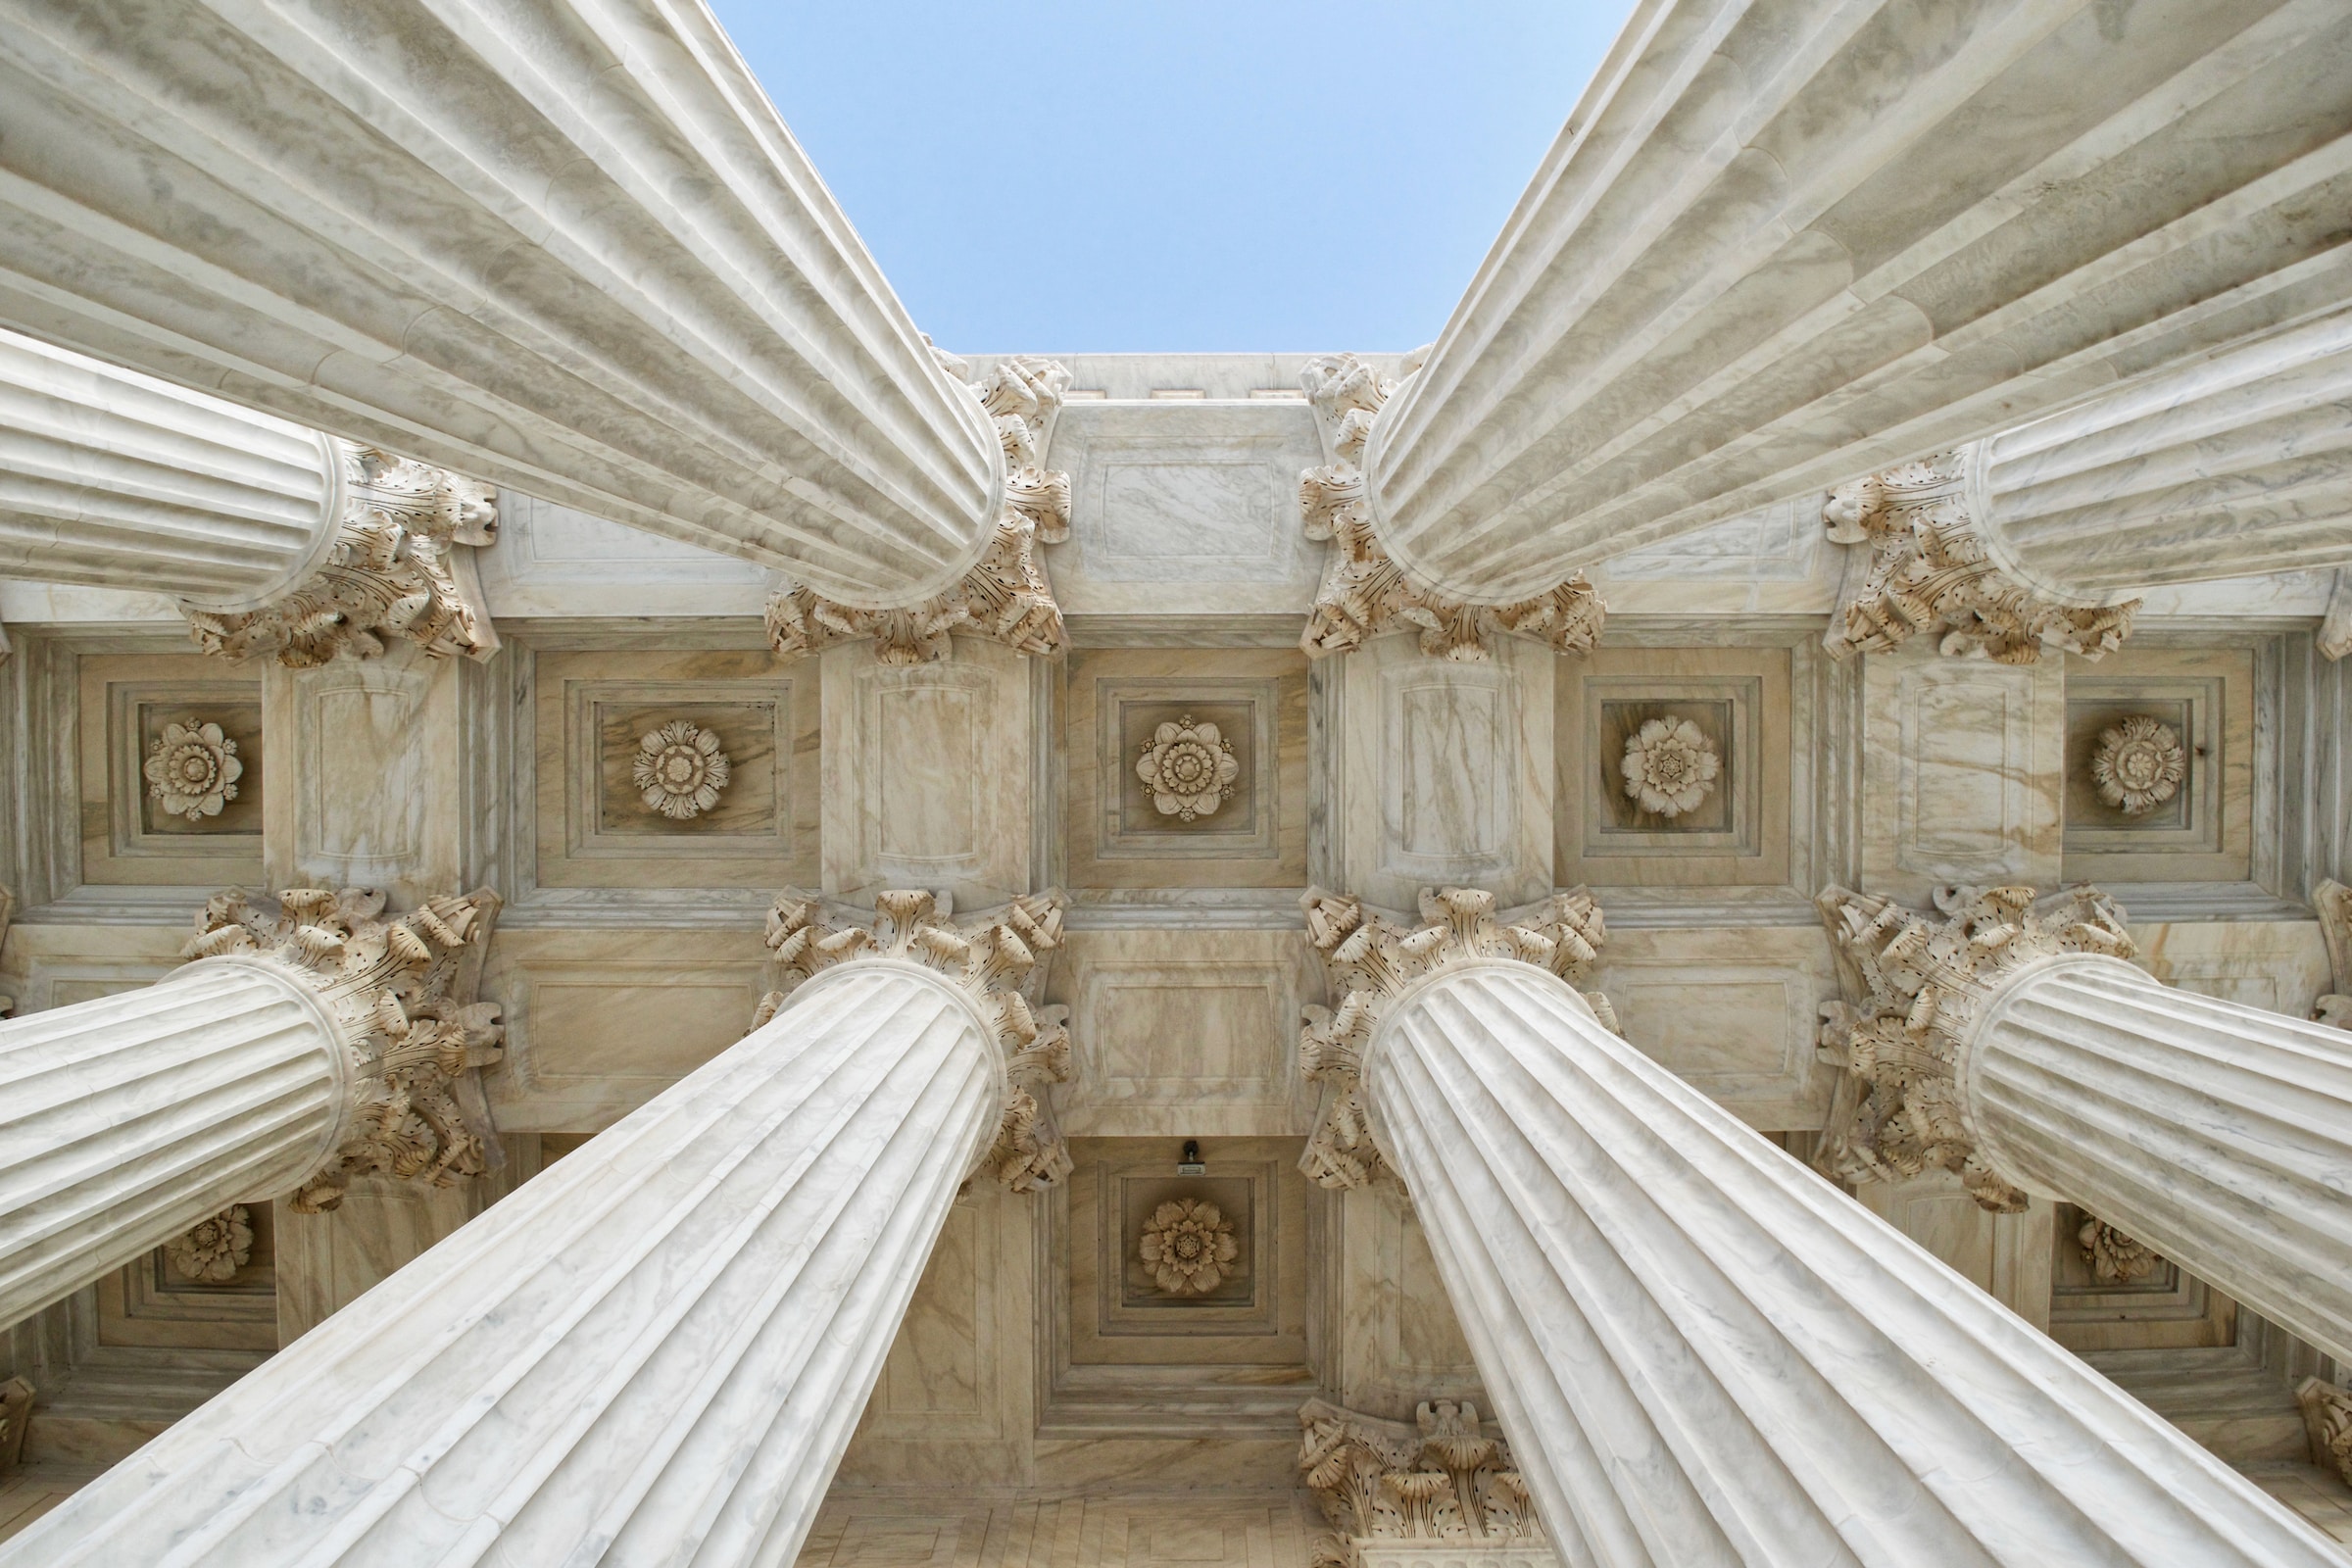 Featured image for “Supreme Court Cites RFI Amicus Brief in Groff v. DeJoy Decision”